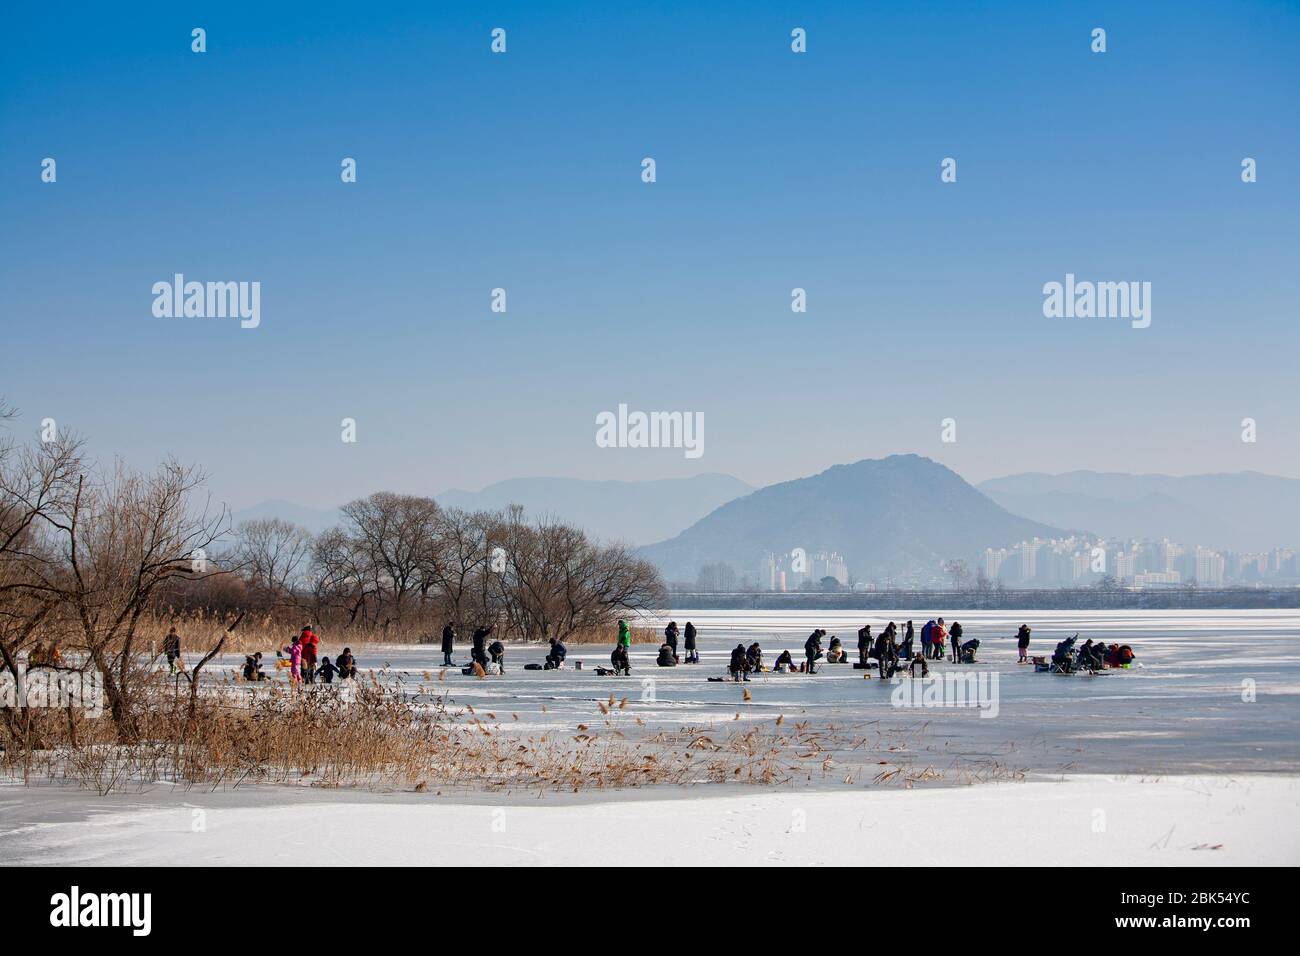 many people enjoying ice fishing at Uiamho Lake, Chuncheon-si, Korea Stock Photo